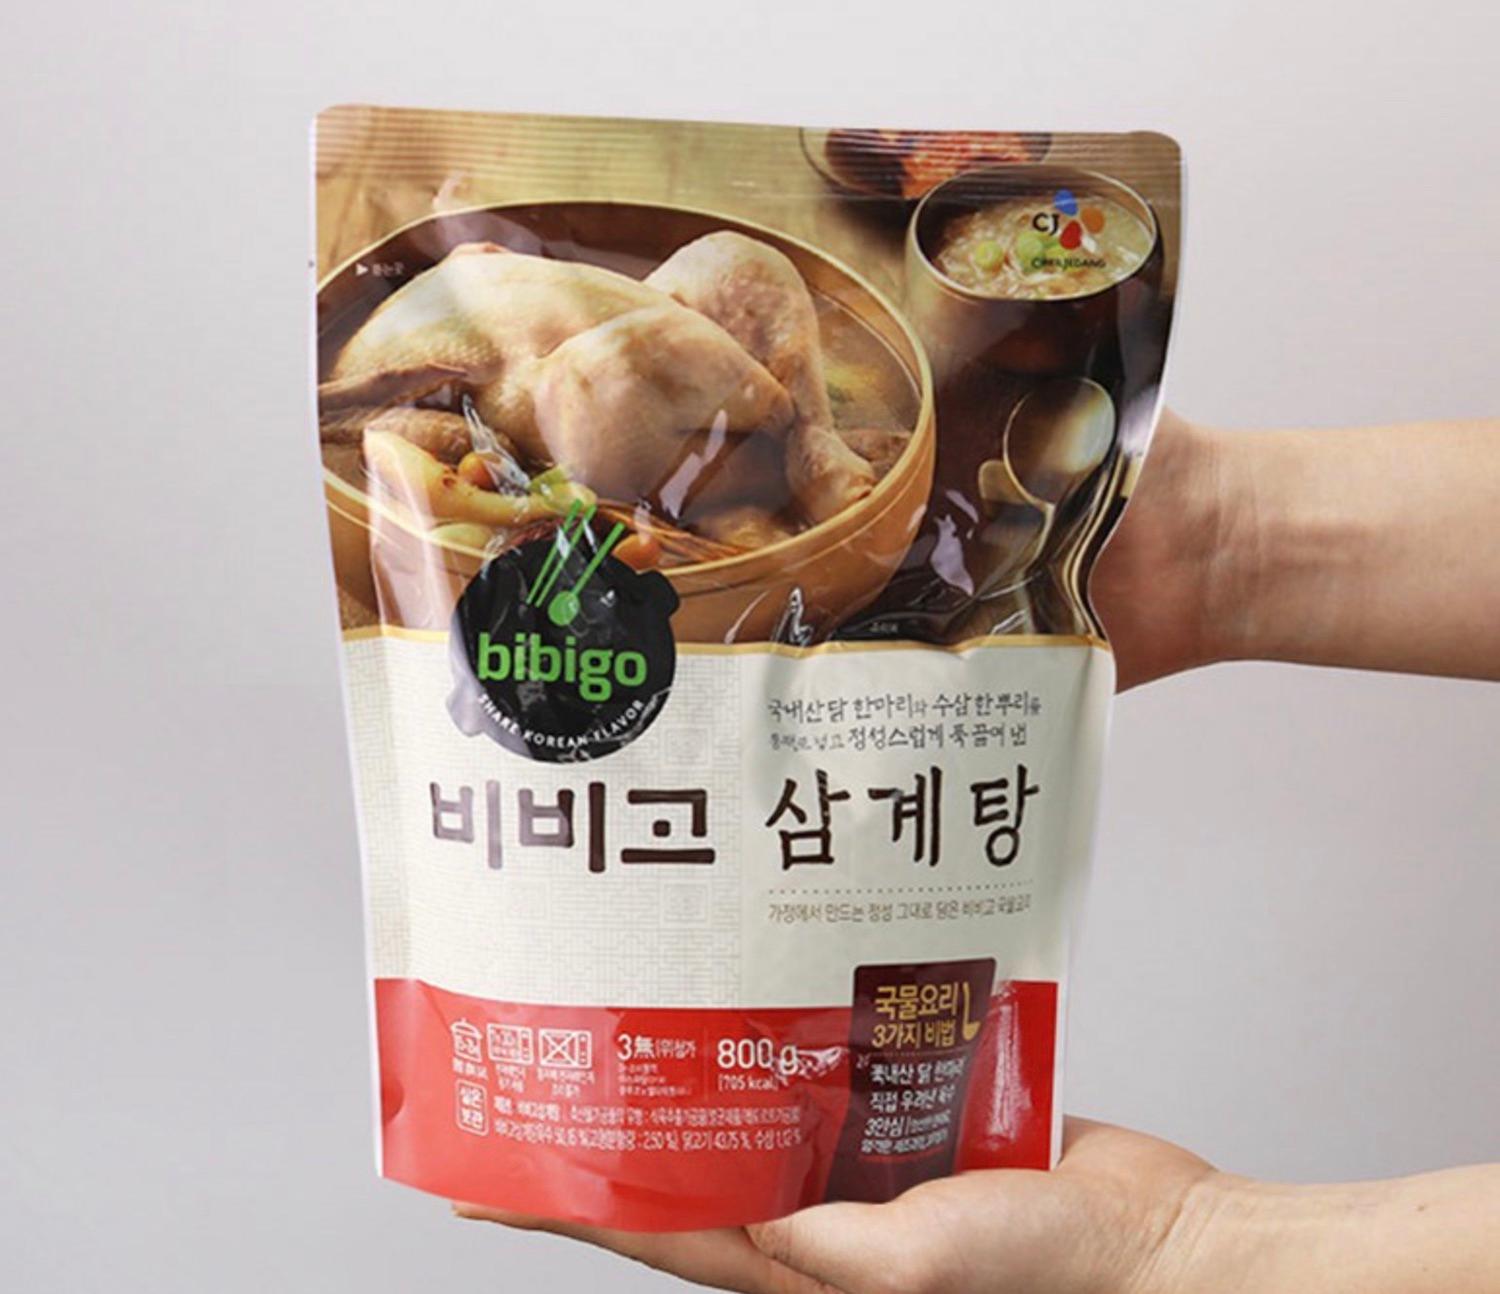 korean brand bibigo's samgyetang bag 